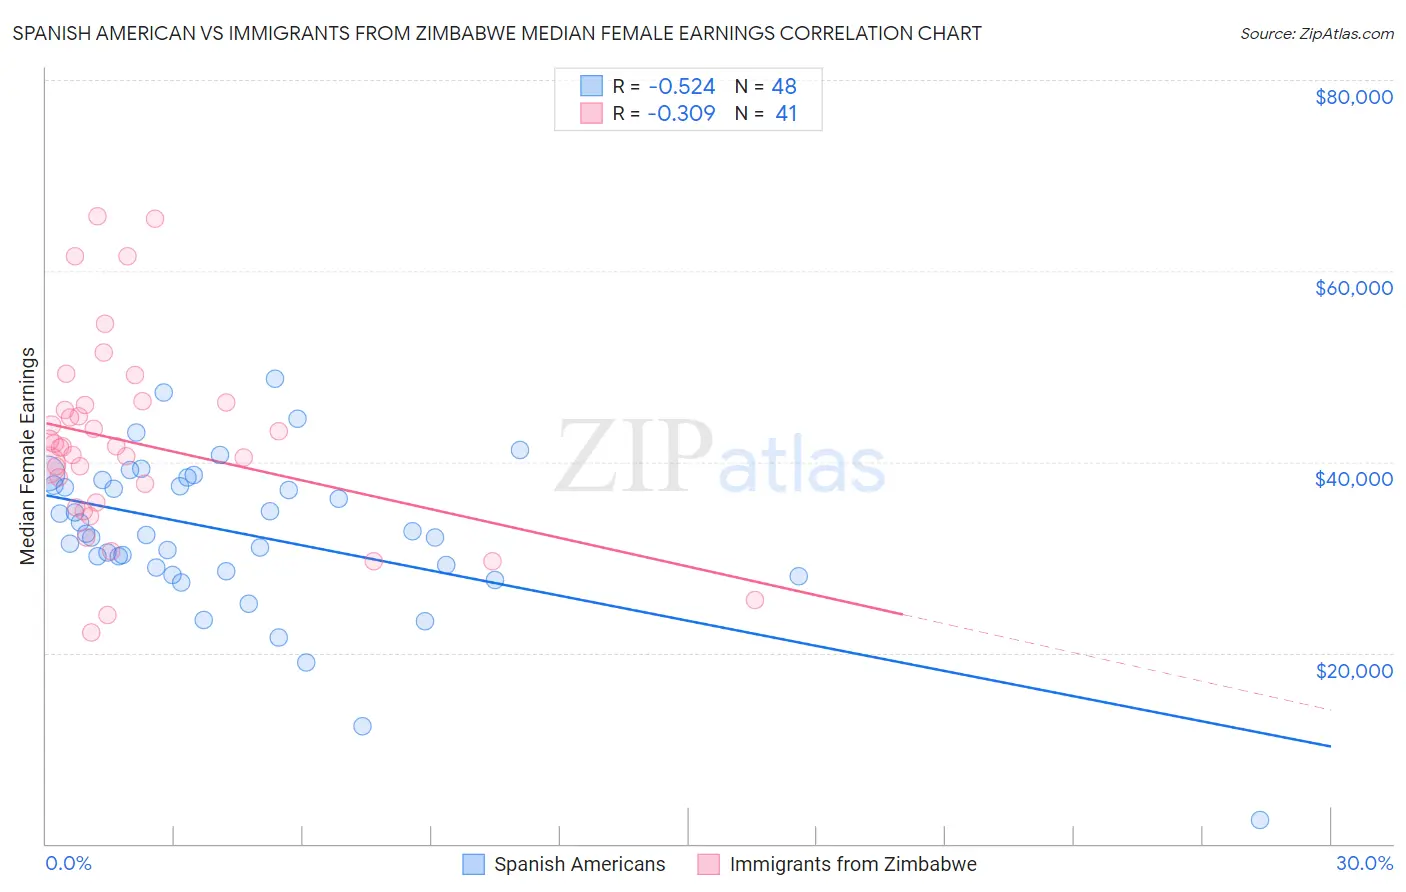 Spanish American vs Immigrants from Zimbabwe Median Female Earnings